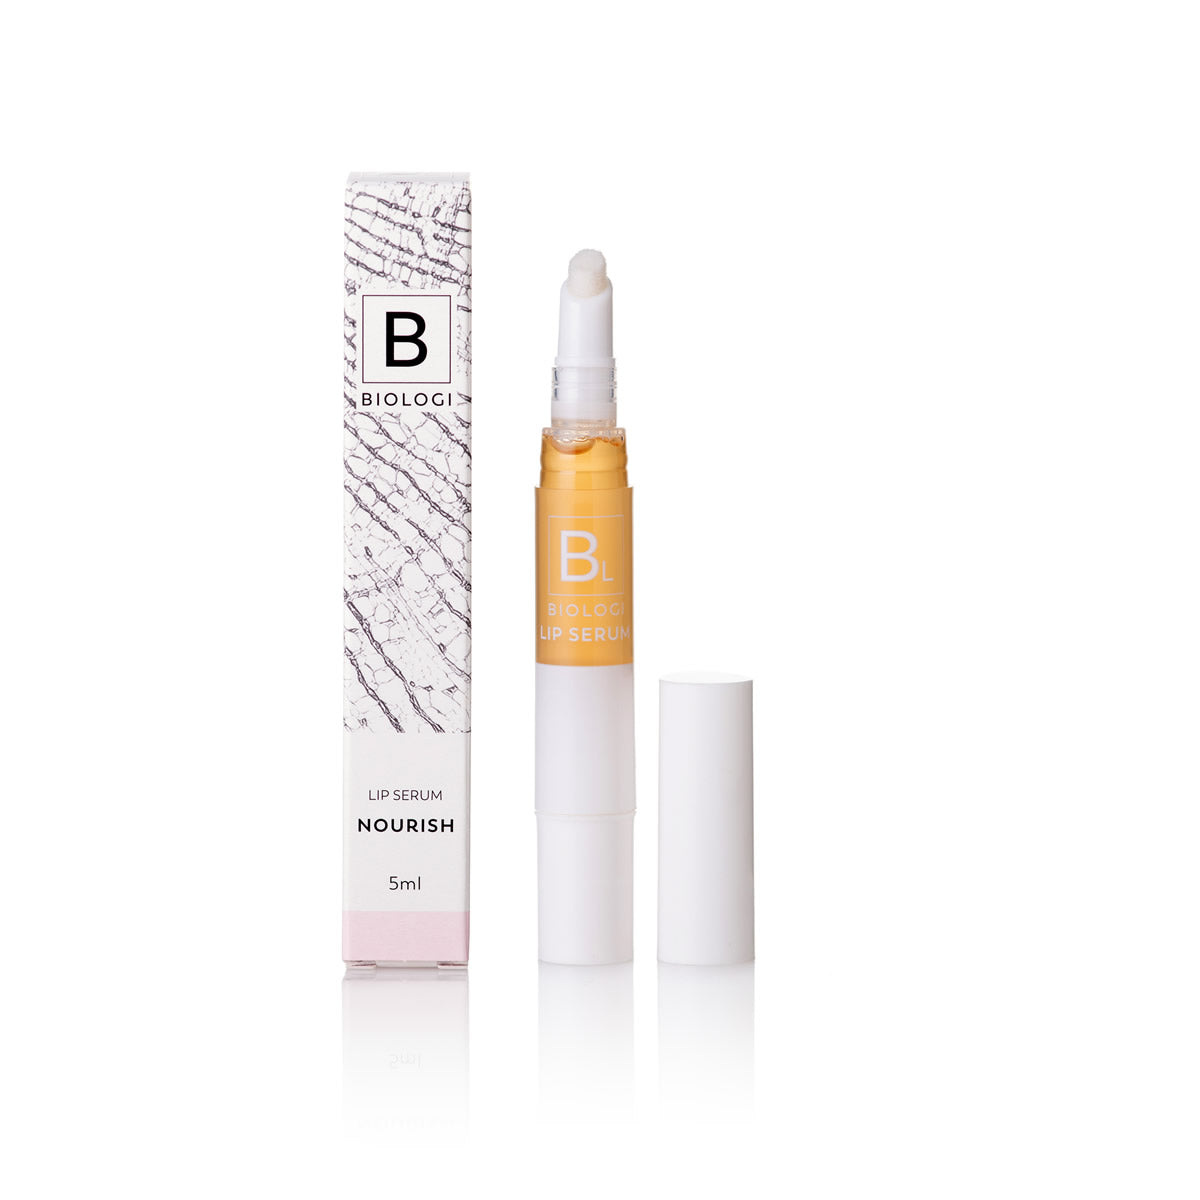 Biologi BL Nourish Lip Serum Packaging